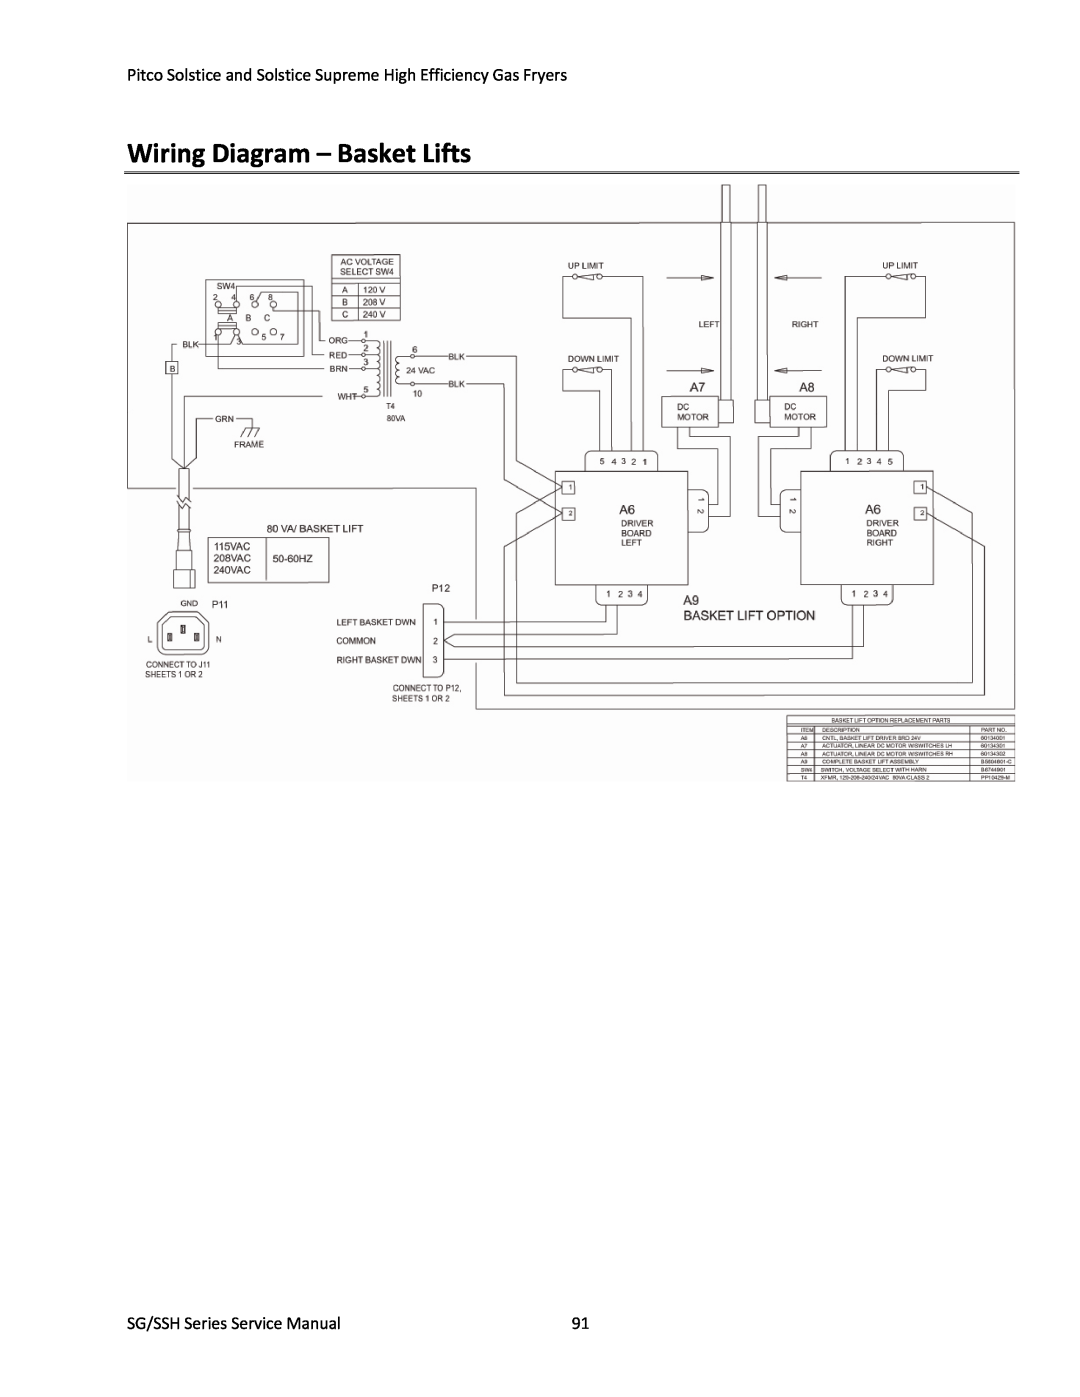 Pitco Frialator L22-345 manual Wiring Diagram – Basket Lifts, SG/SSH Series Service Manual 